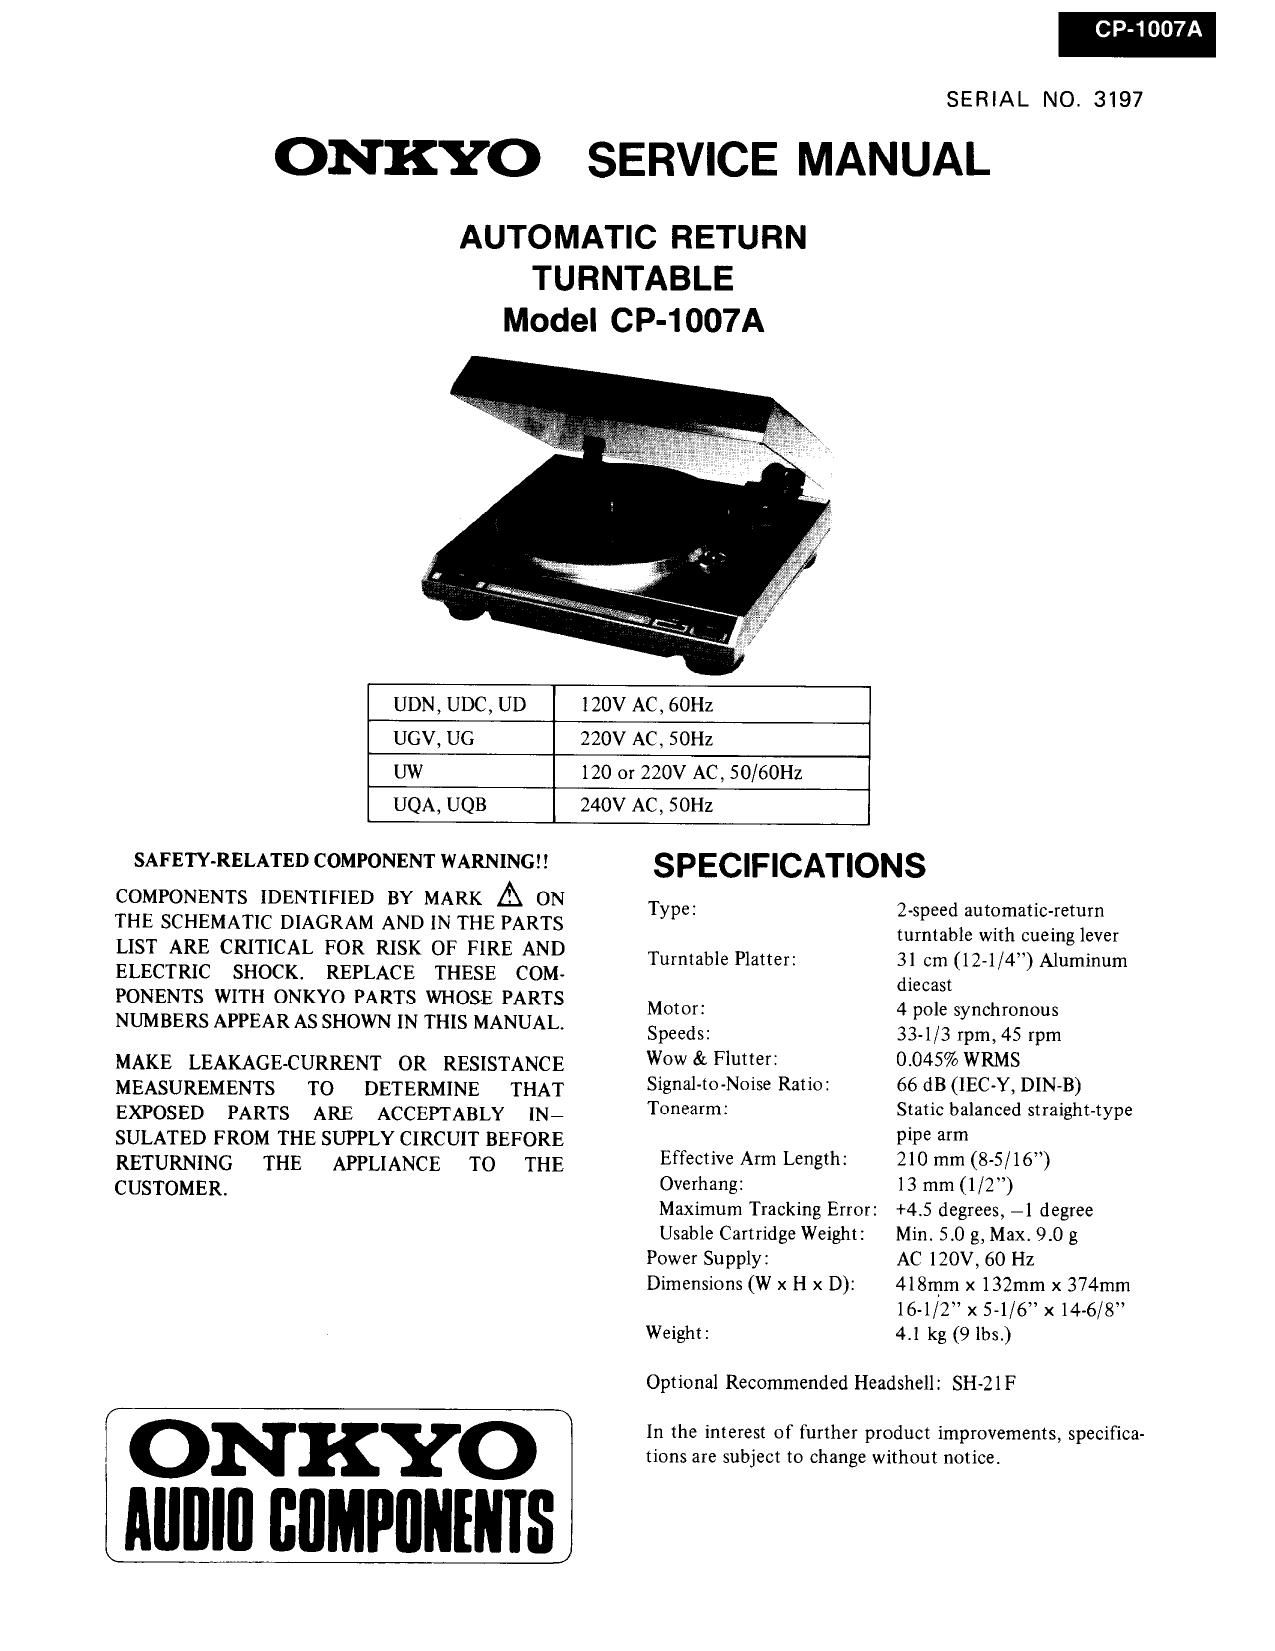 Onkyo CP 1007 A Service Manual